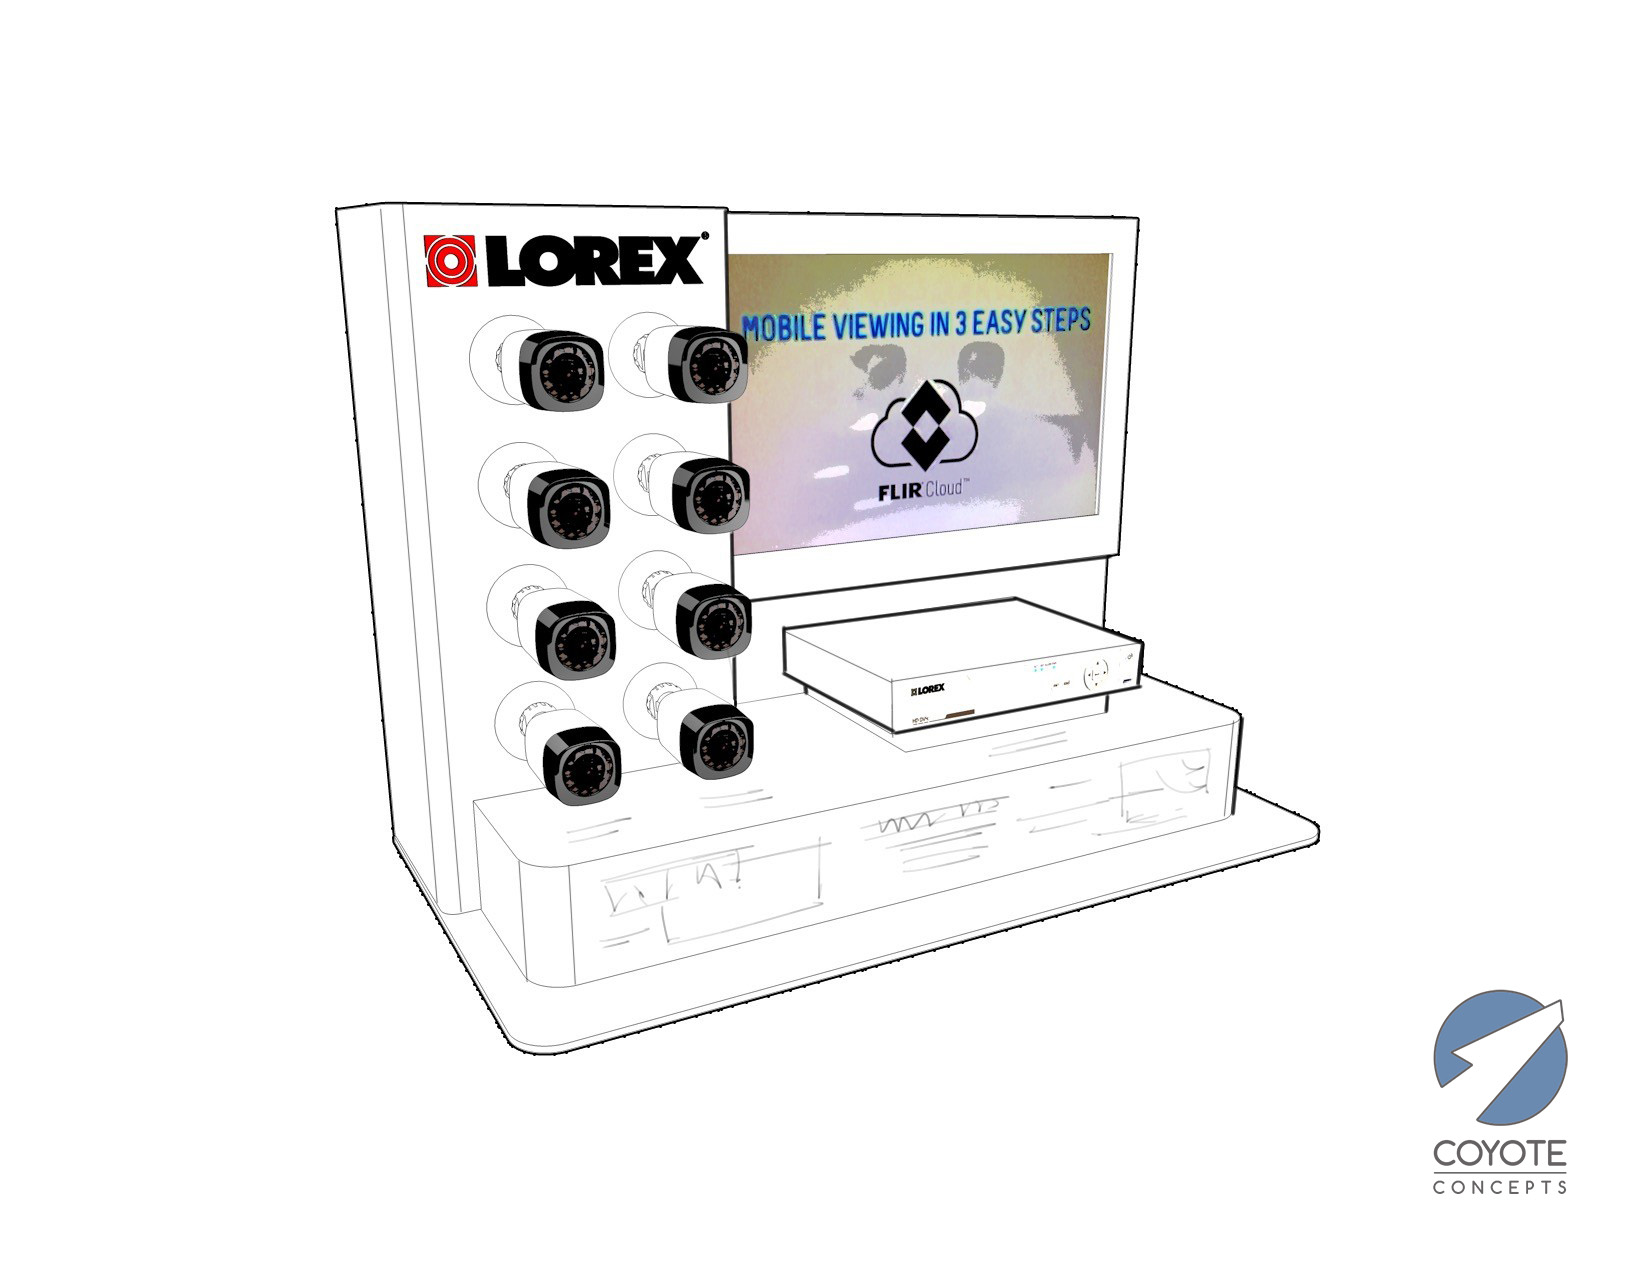 Lorex concept B.jpg